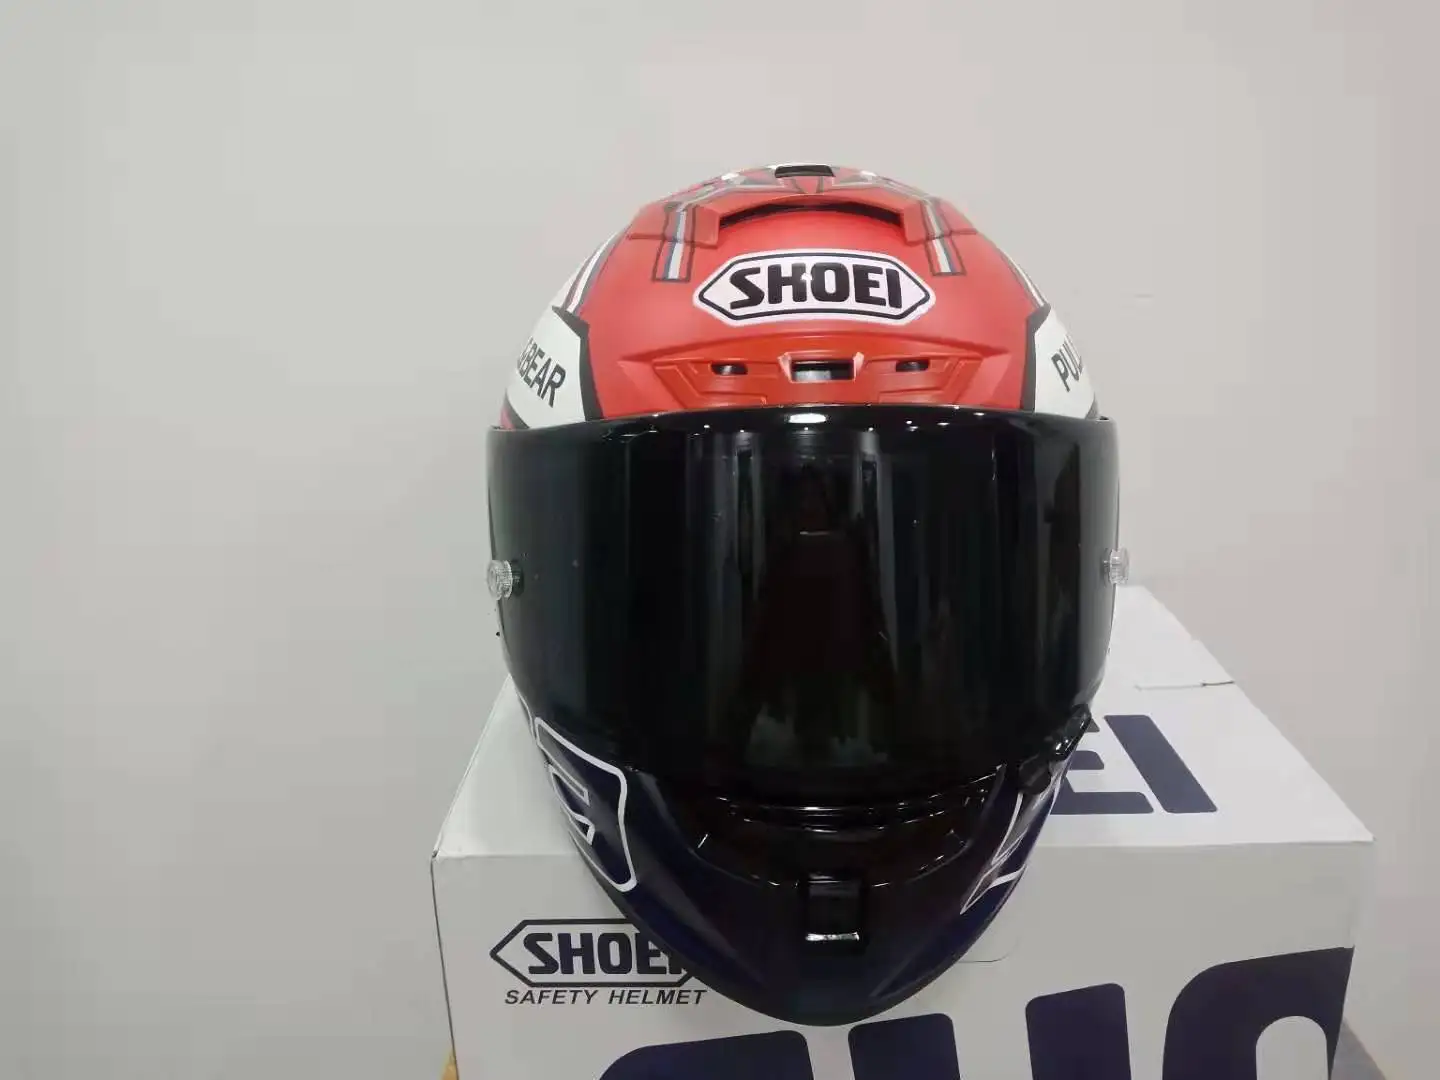 Шлем для мотогонок SHOEI93 pull BEAR, шлем для всего лица, безопасный Летний шлем helmt X12 X14 93, модель шлема